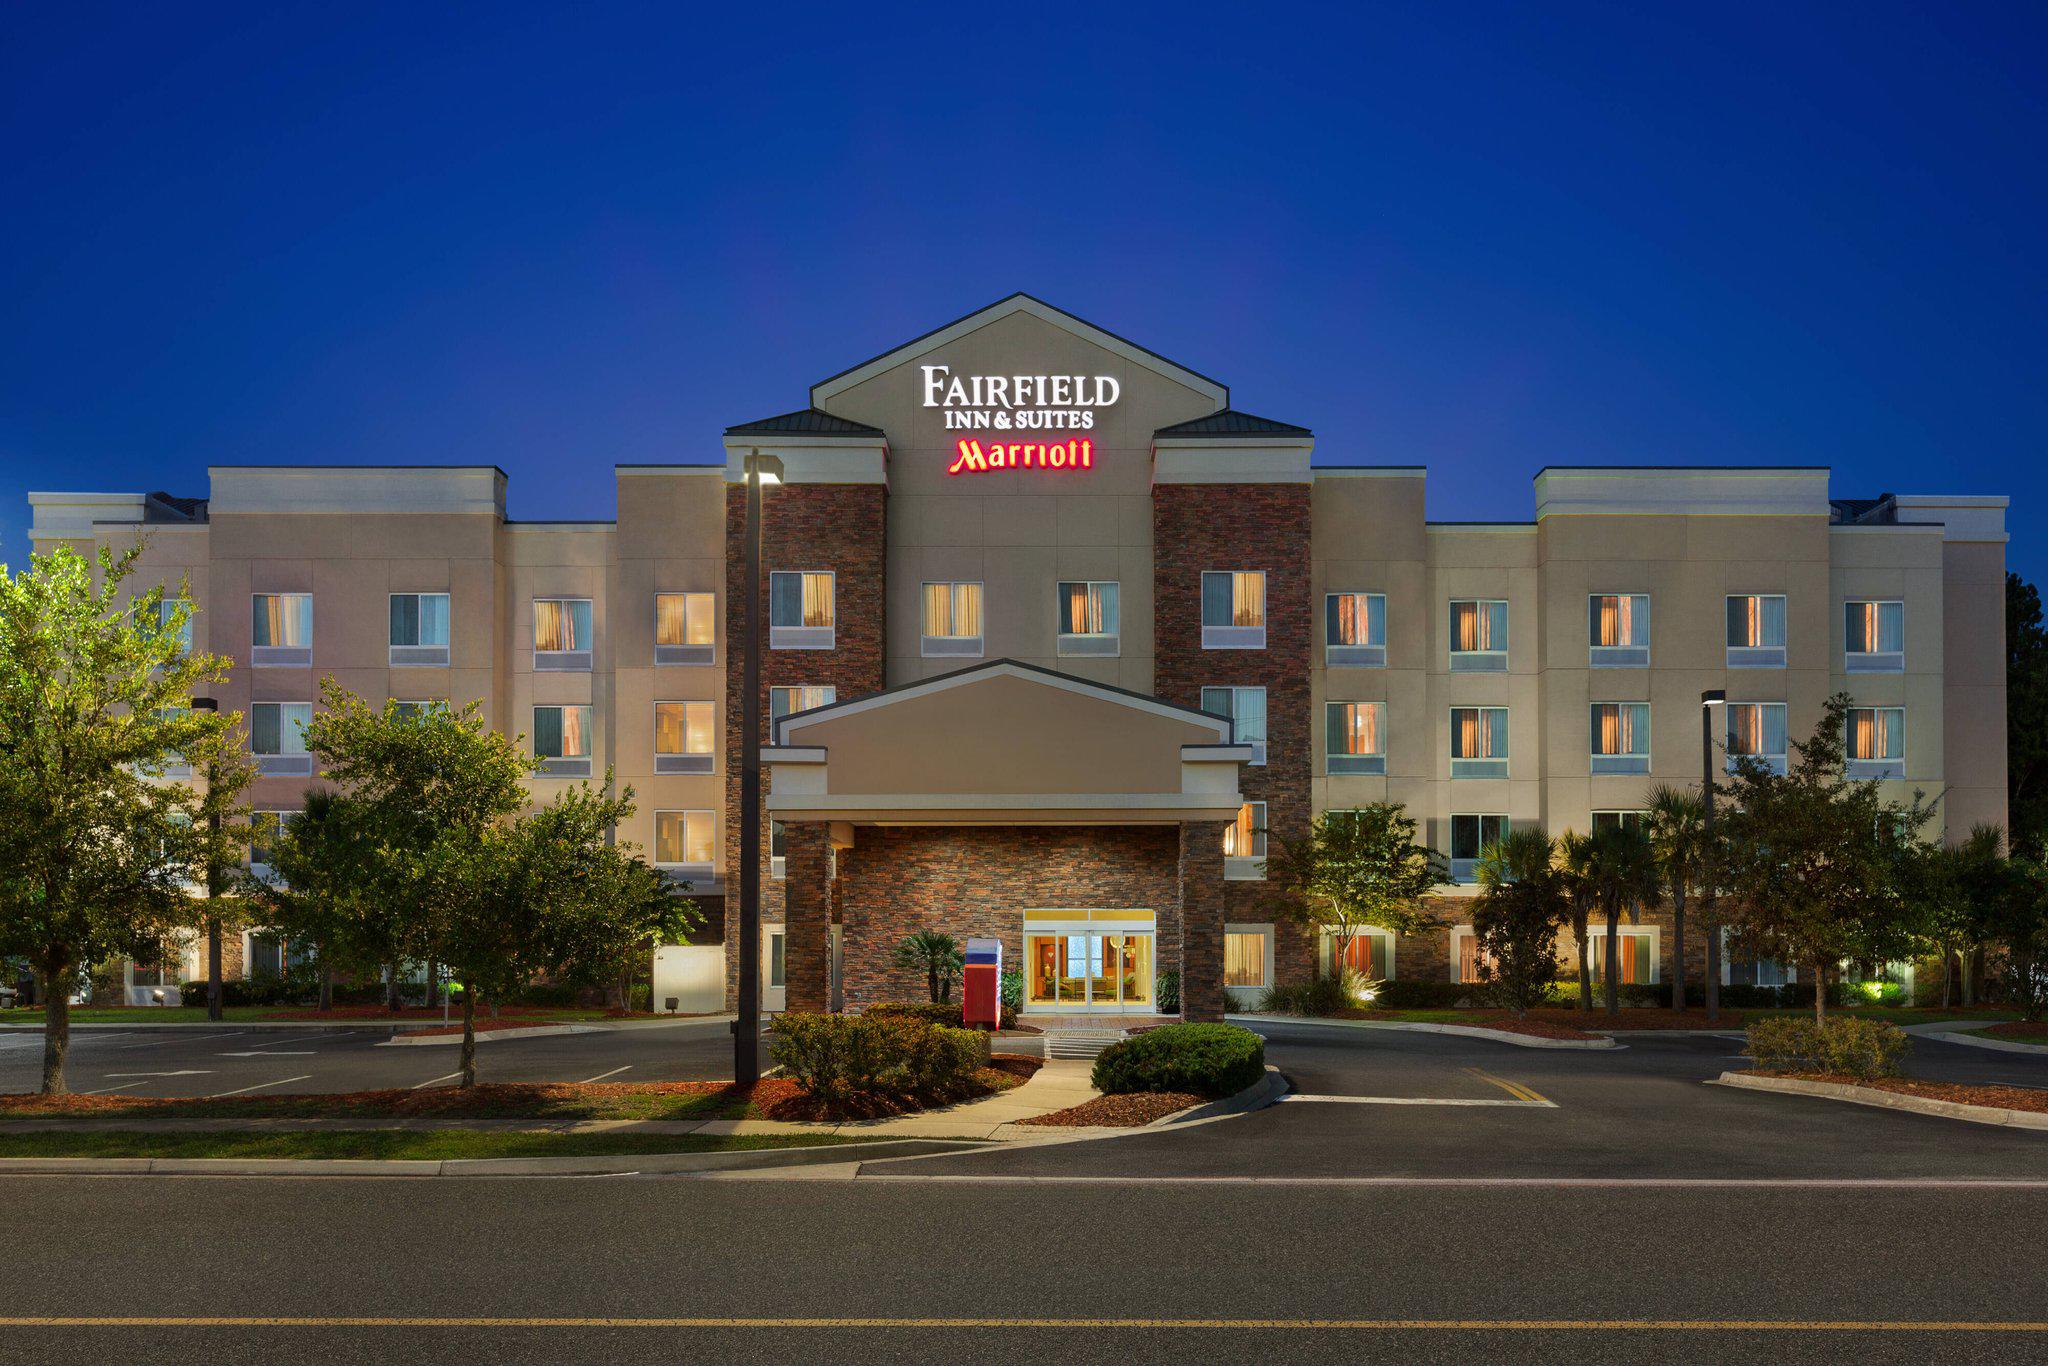 Fairfield Inn & Suites by Marriott Jacksonville West/Chaffee Point.